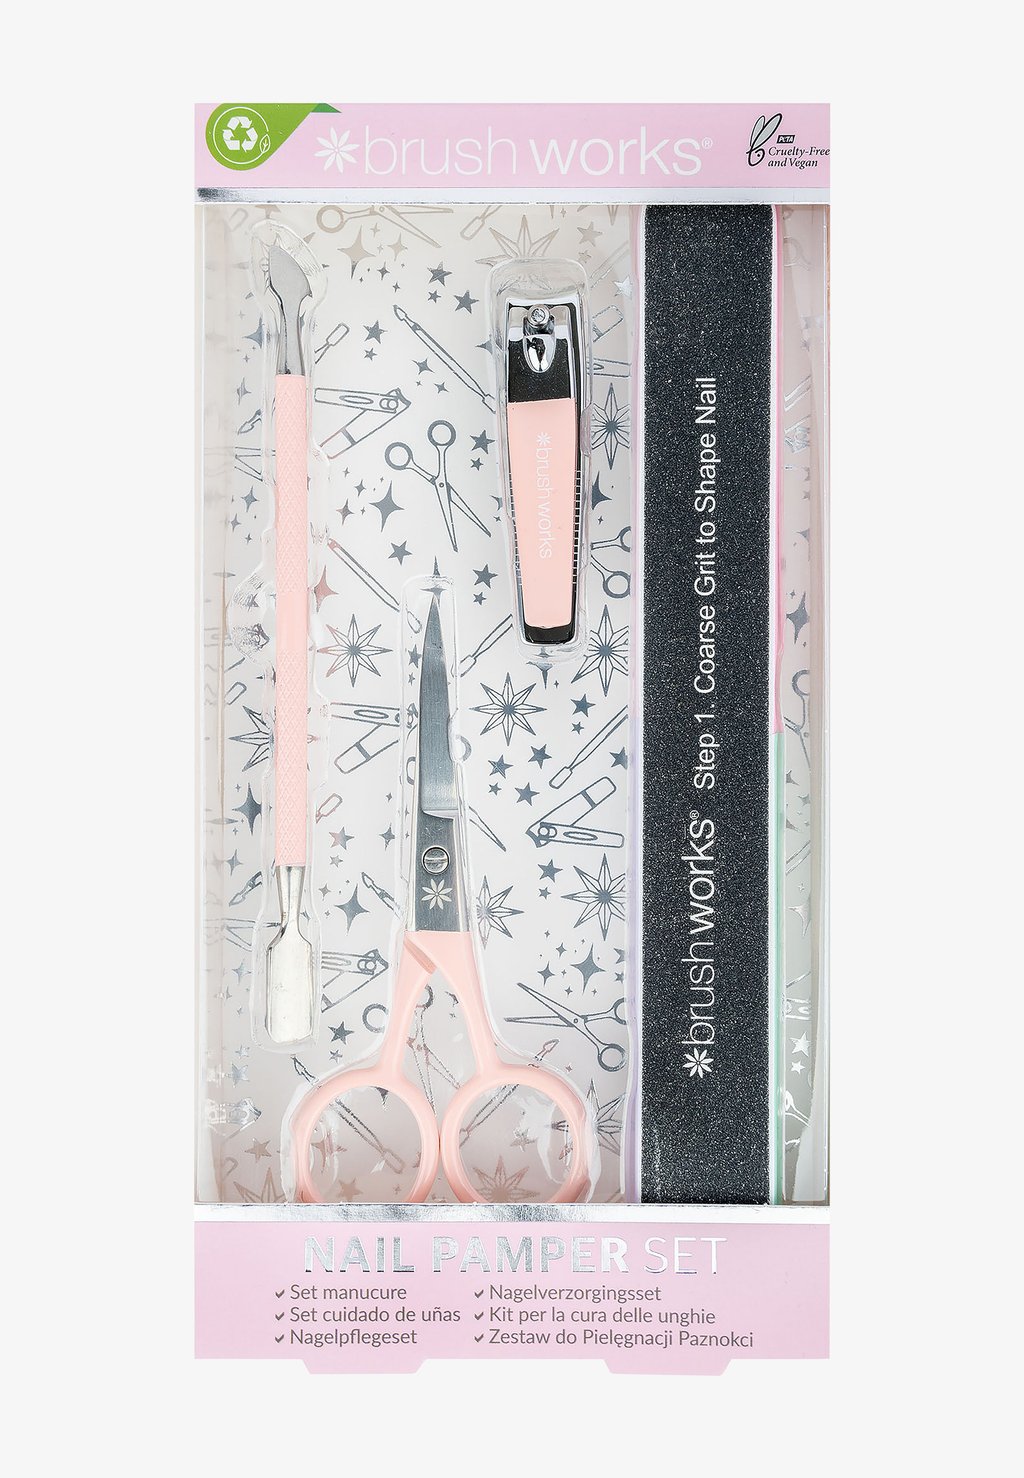 Набор для ногтей Brushworks Nail Pamper Set Brushworks, розовый